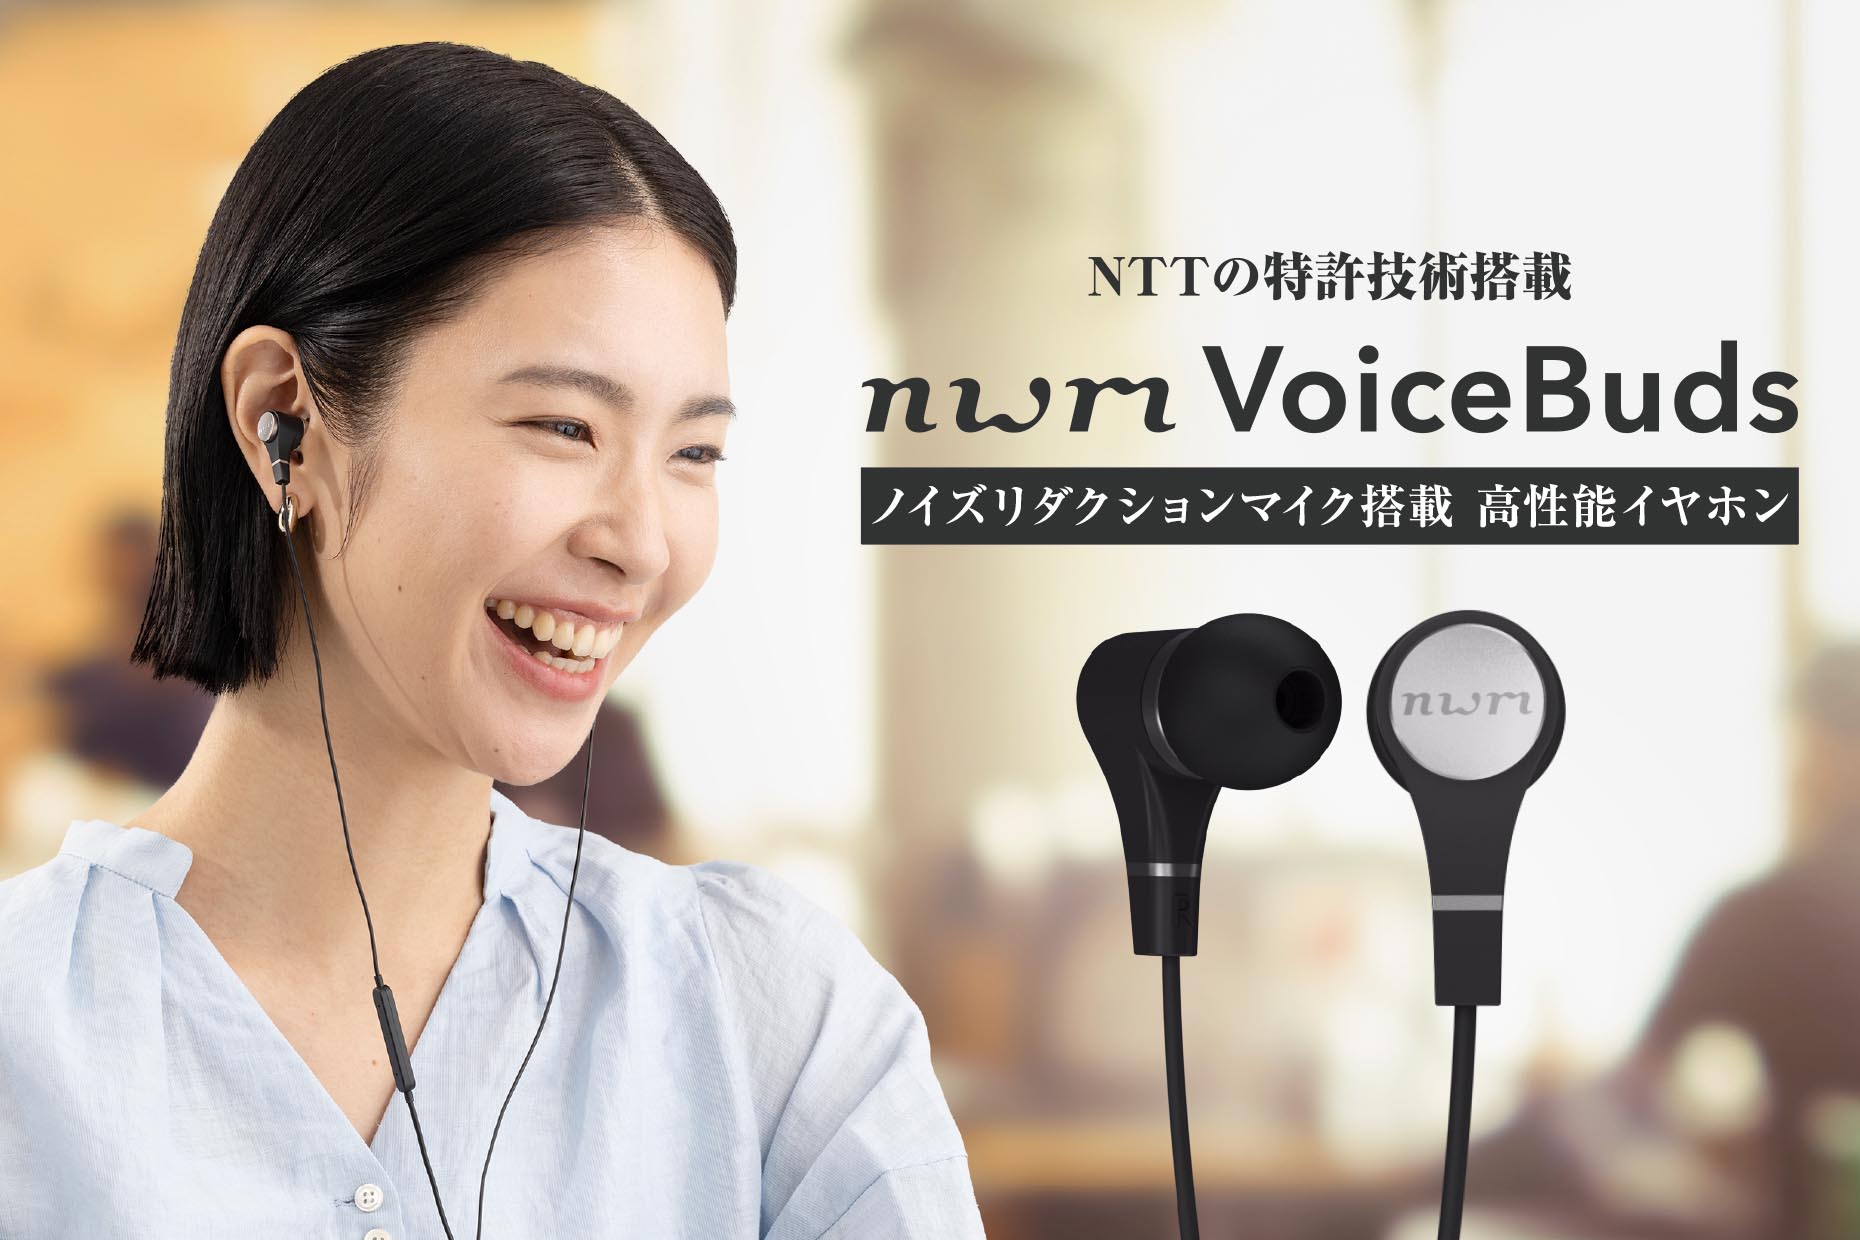 nwm VoiceBuds ボイスフォーカスイヤホン by NTTソノリティ - イヤホン